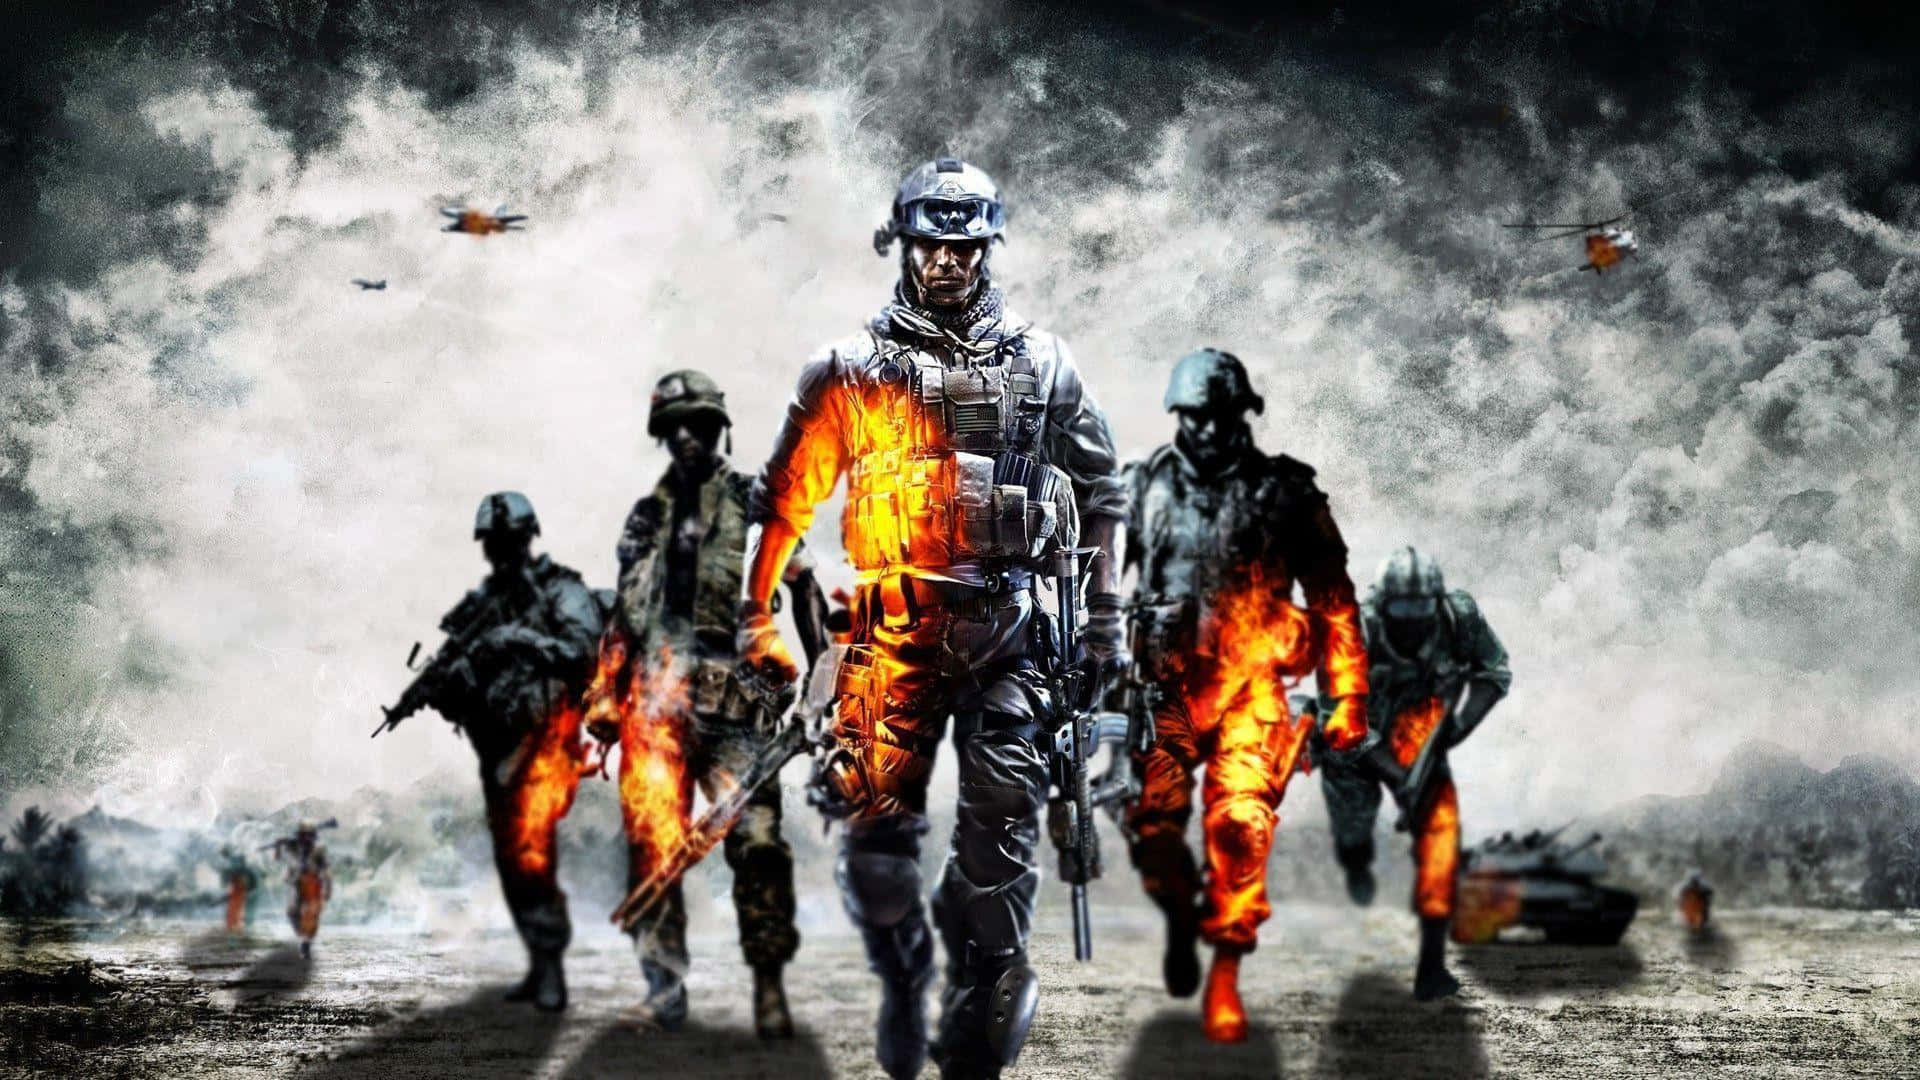 Hintergrundbildvon Battlefield 4